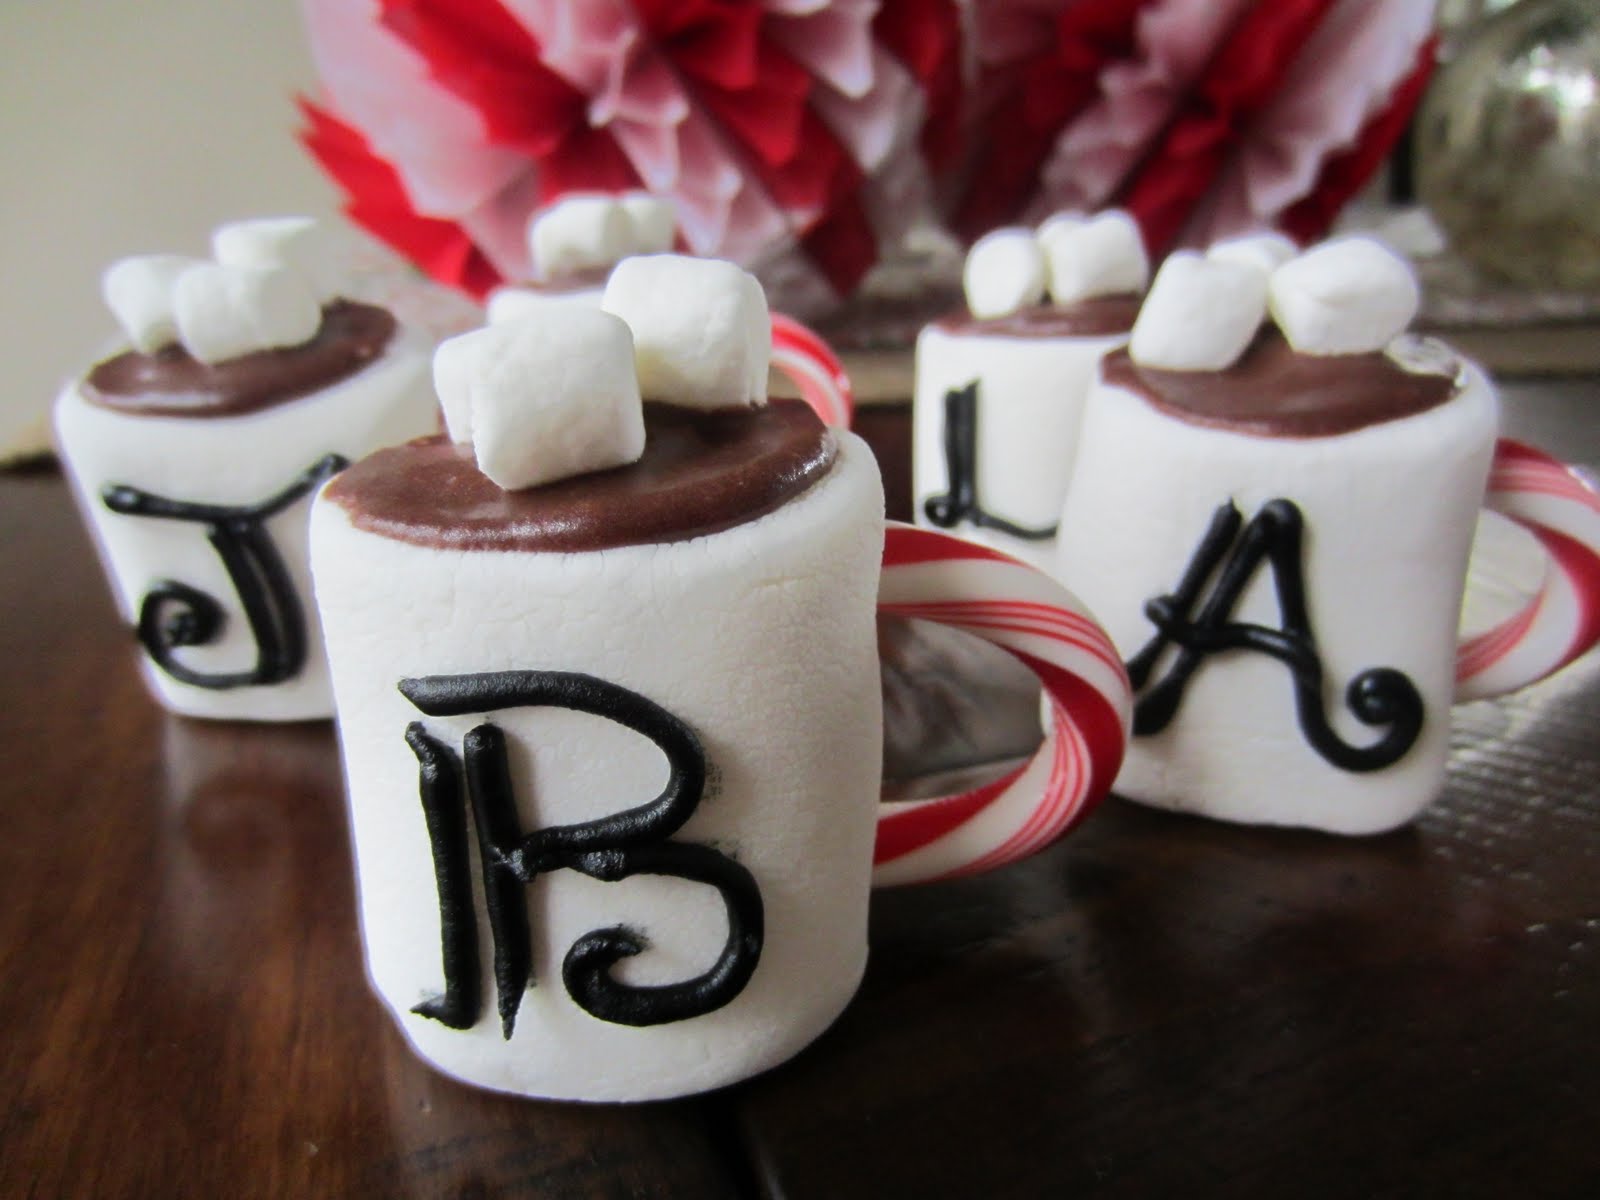 Marshmallow Hot Chocolate Mug